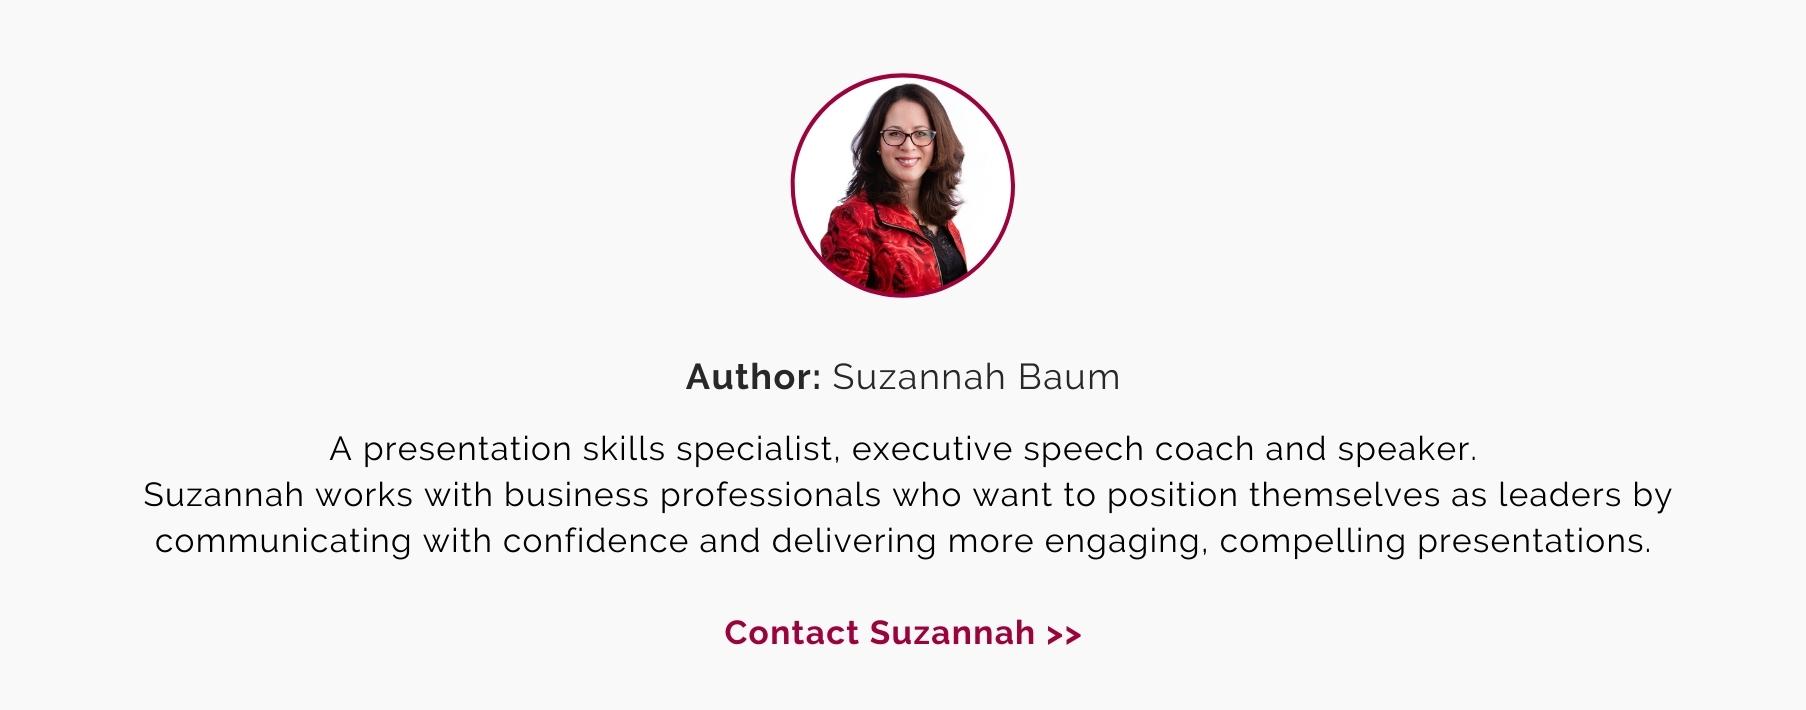 Suzannah Baum, Presentations and public speaking skills trainer, executive speech coach.